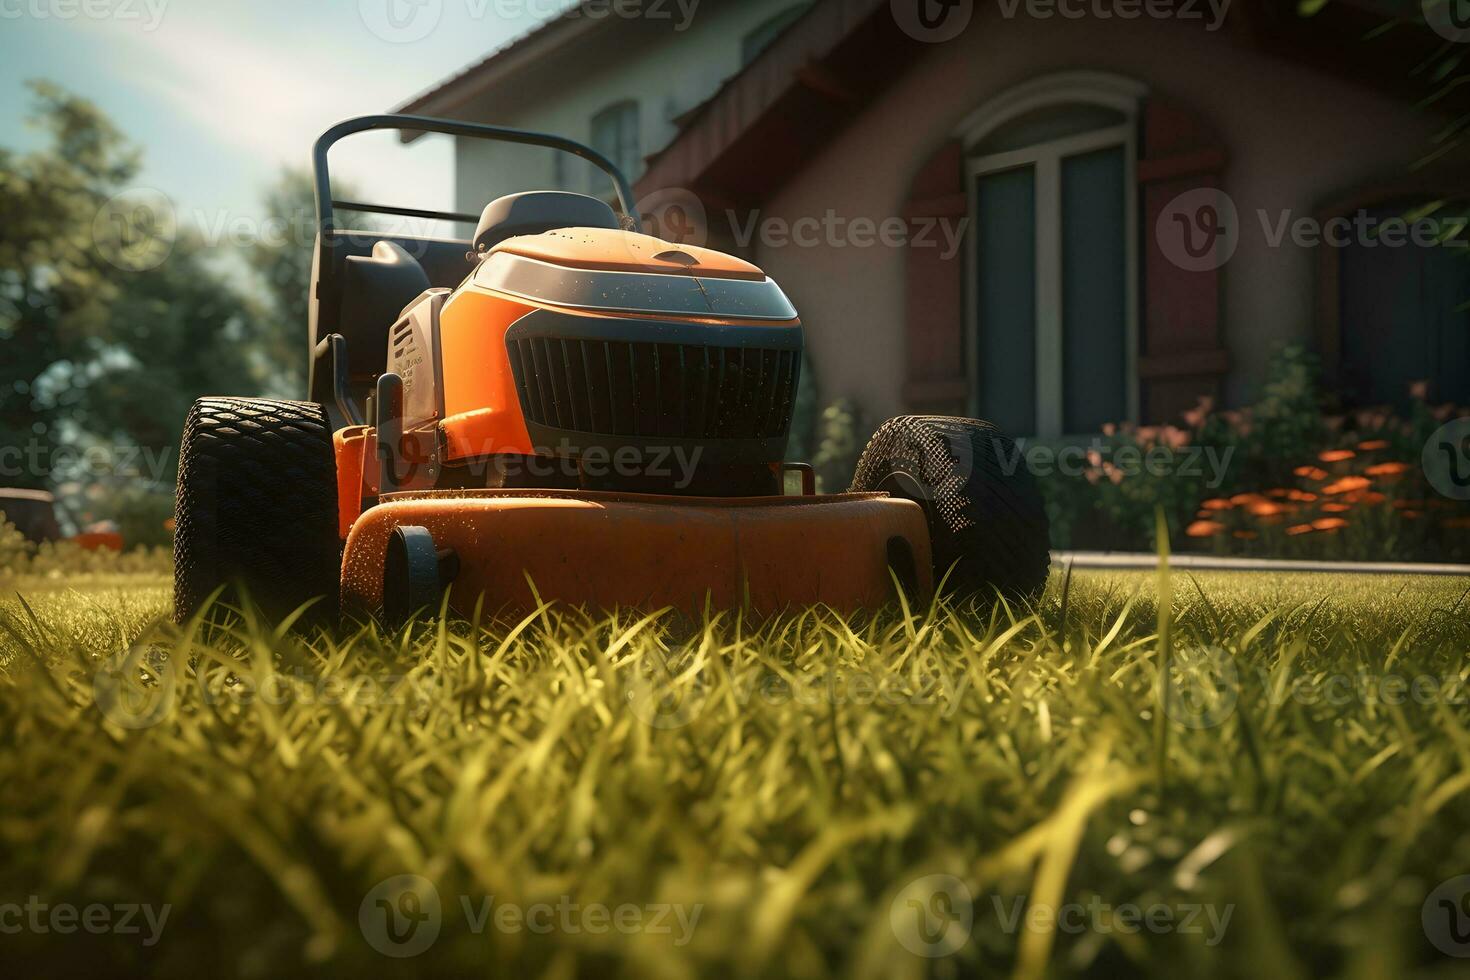 Lawn mower cut grass. Garden work. Electric Rotary lawn mower machine. Neural network AI generated photo